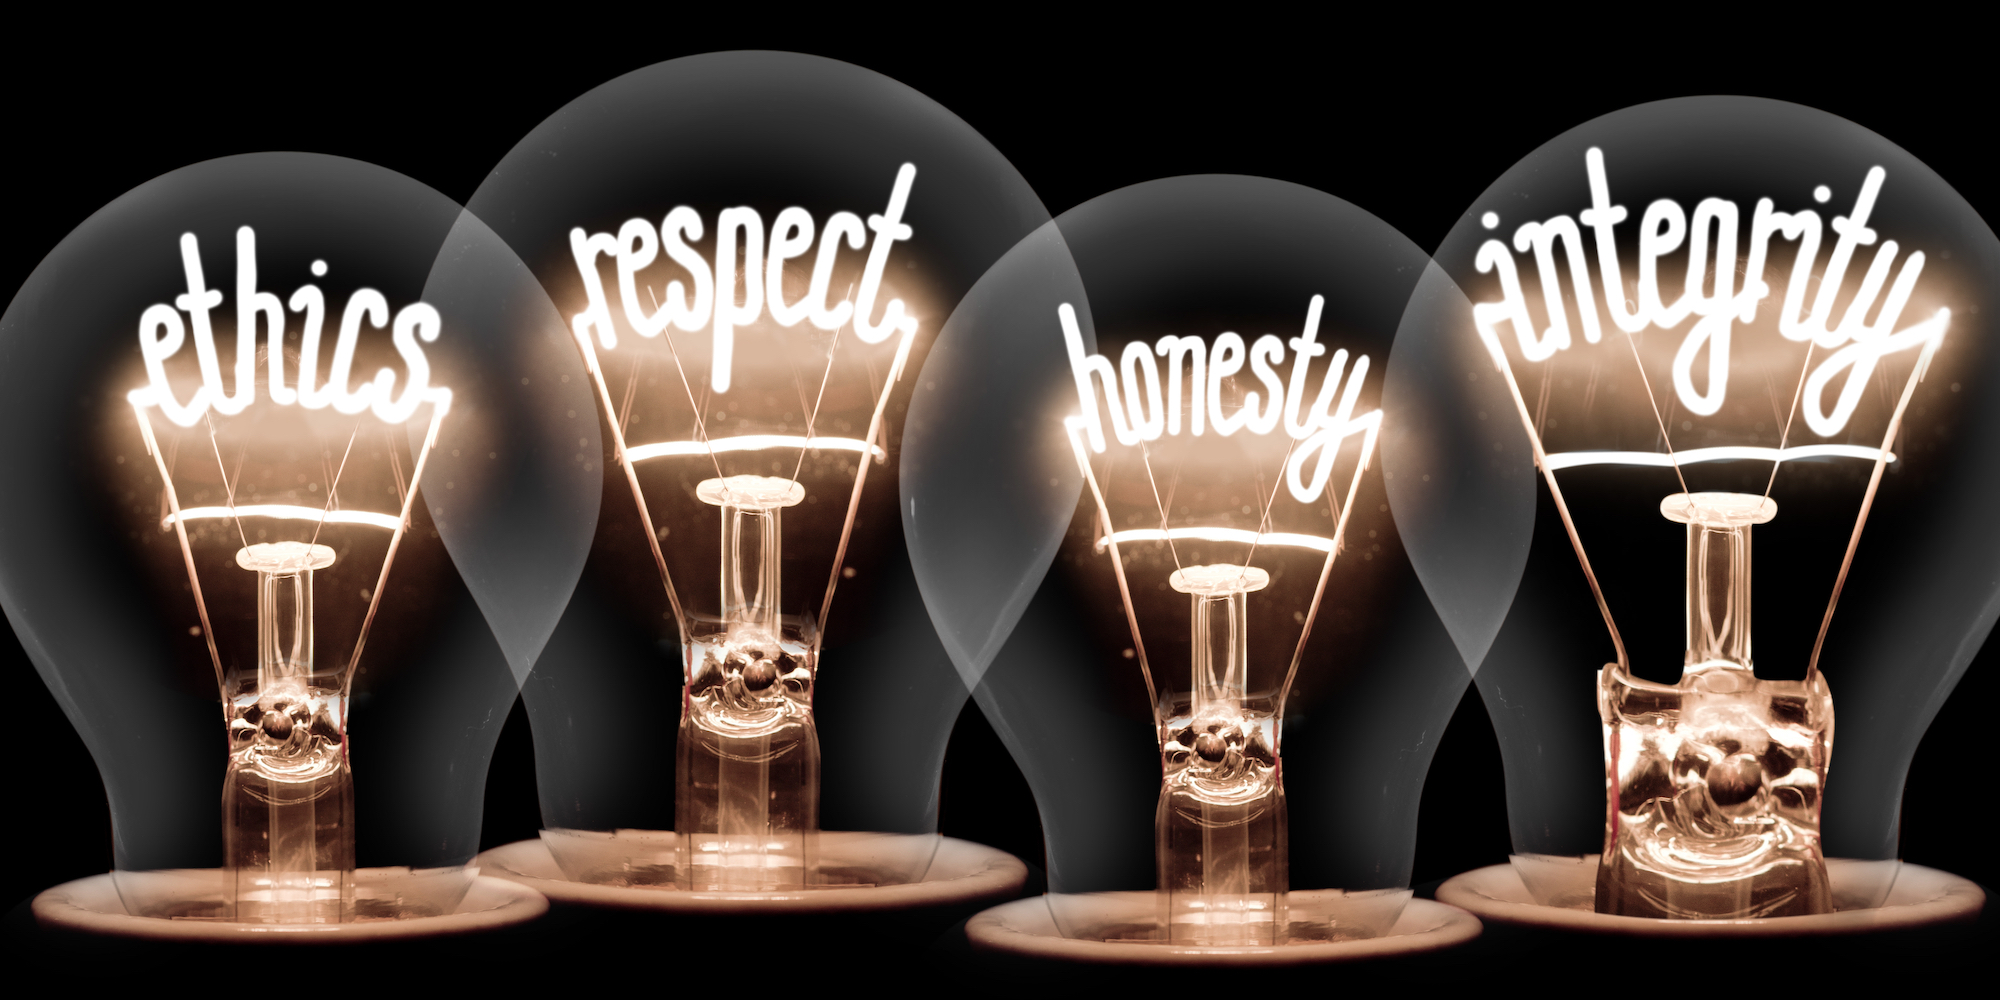 lightbulbs to have integrity respect honesty ethics